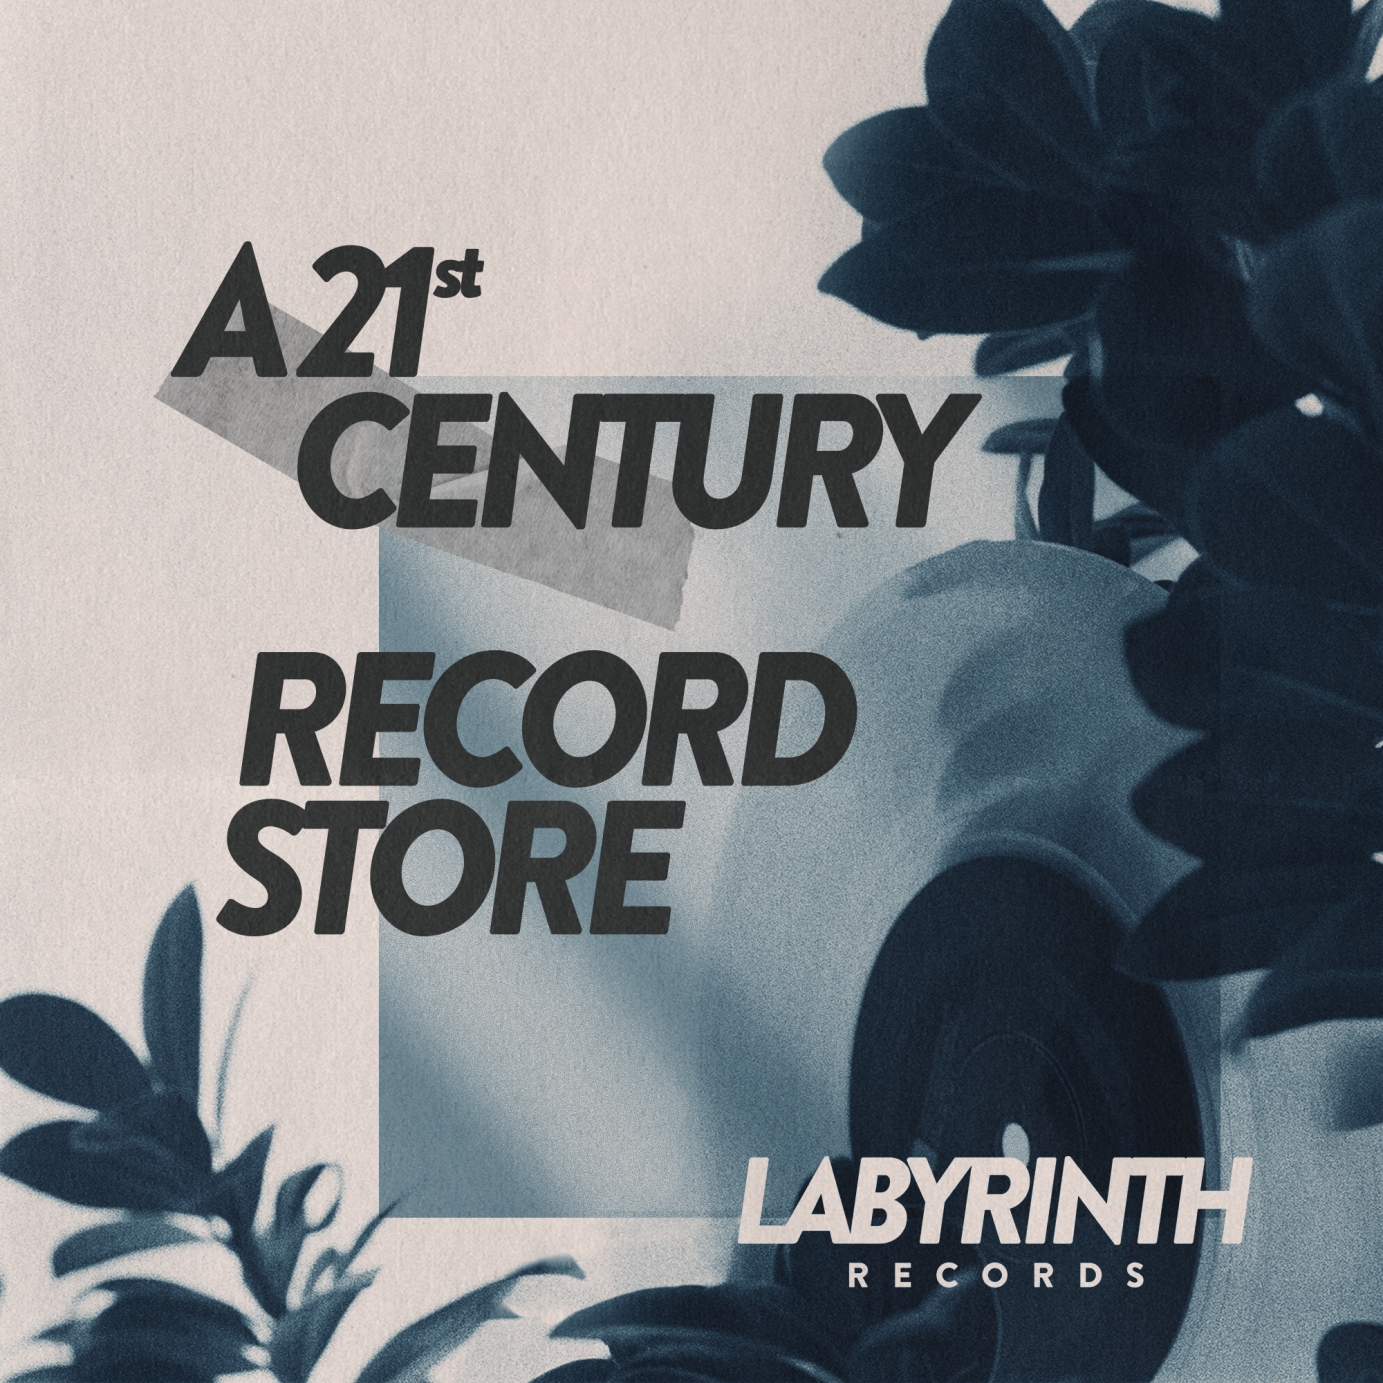 Labyrinth Records